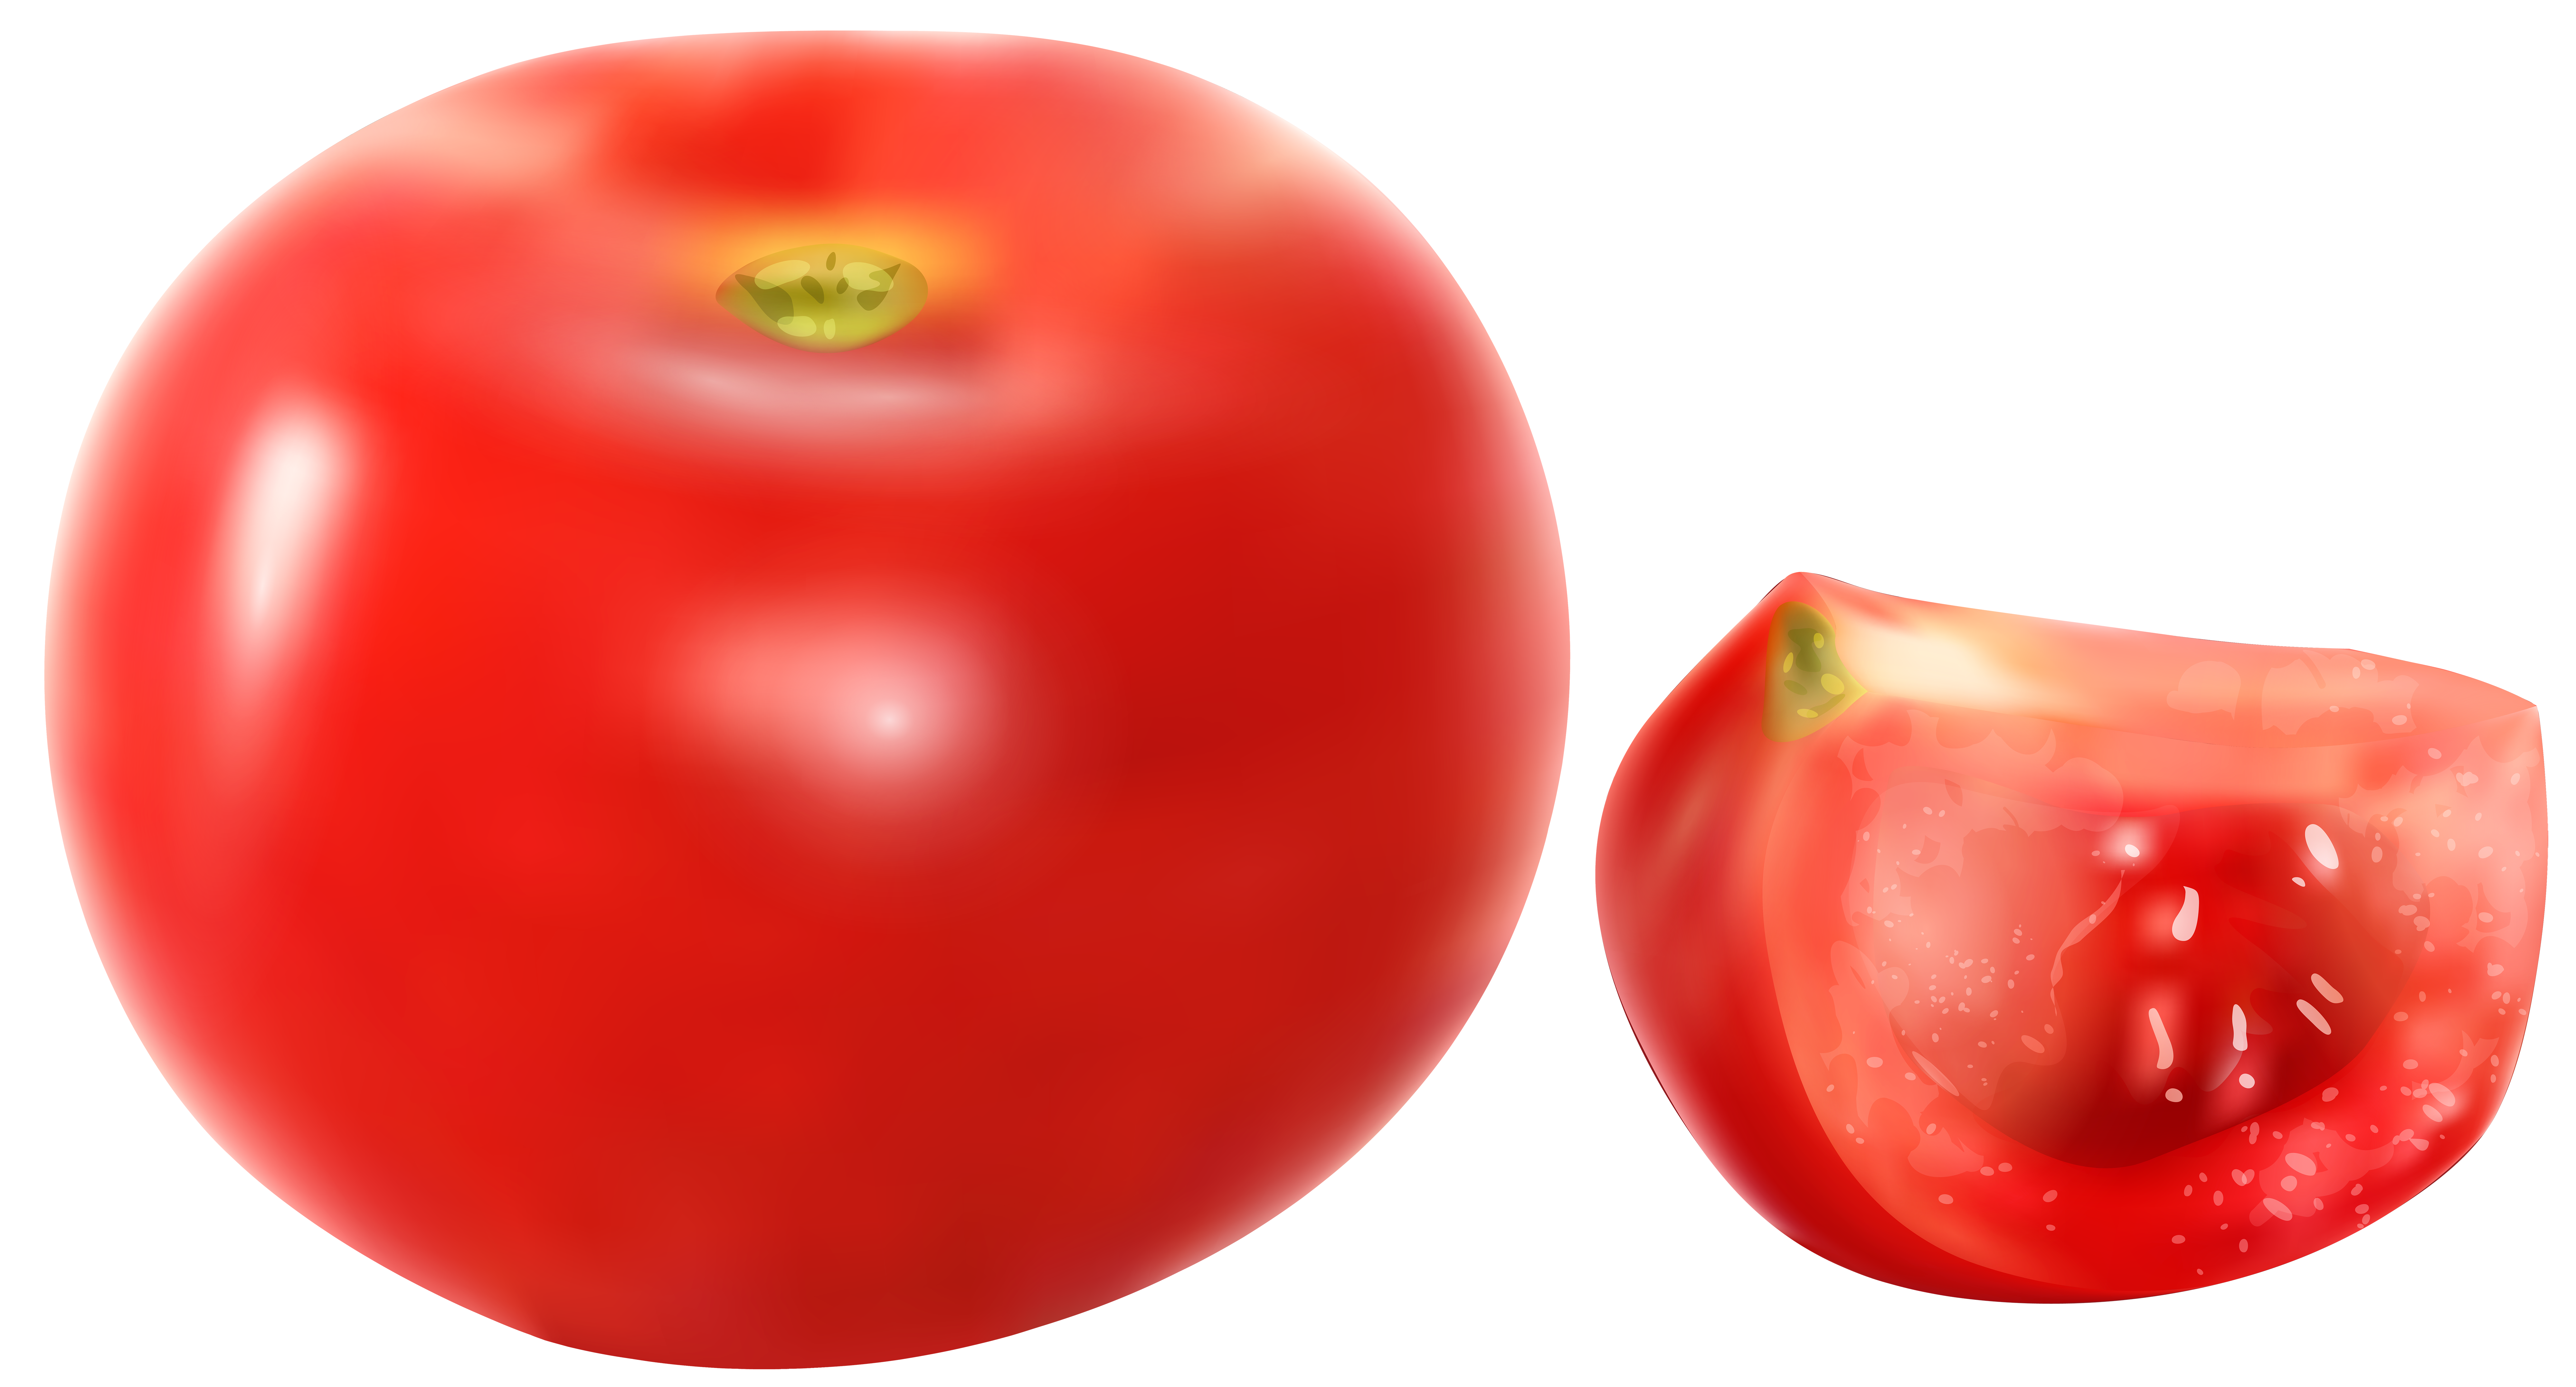 tomatoes clipart happy tomato